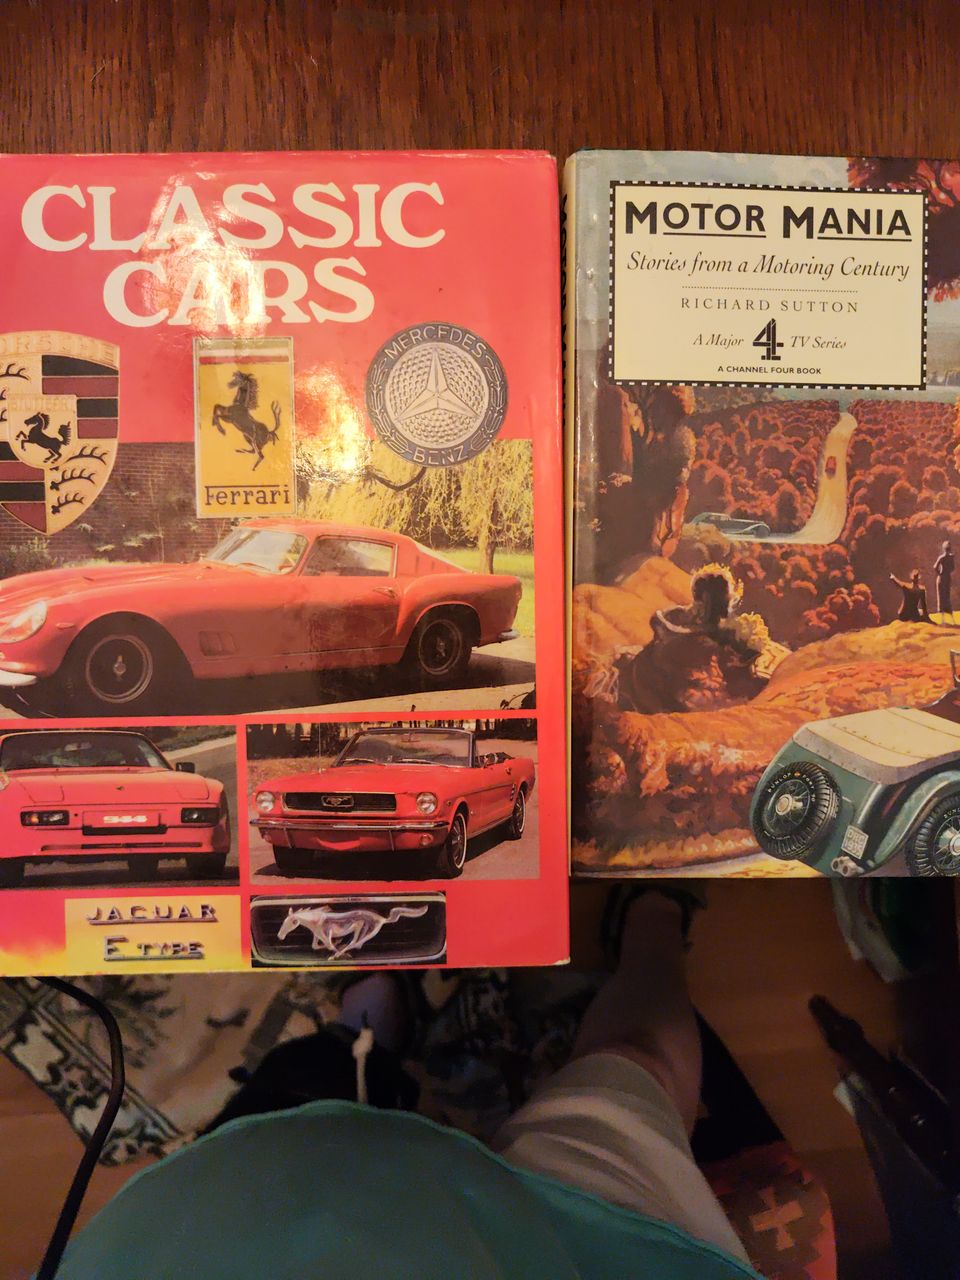 Classic cars-Motor mania